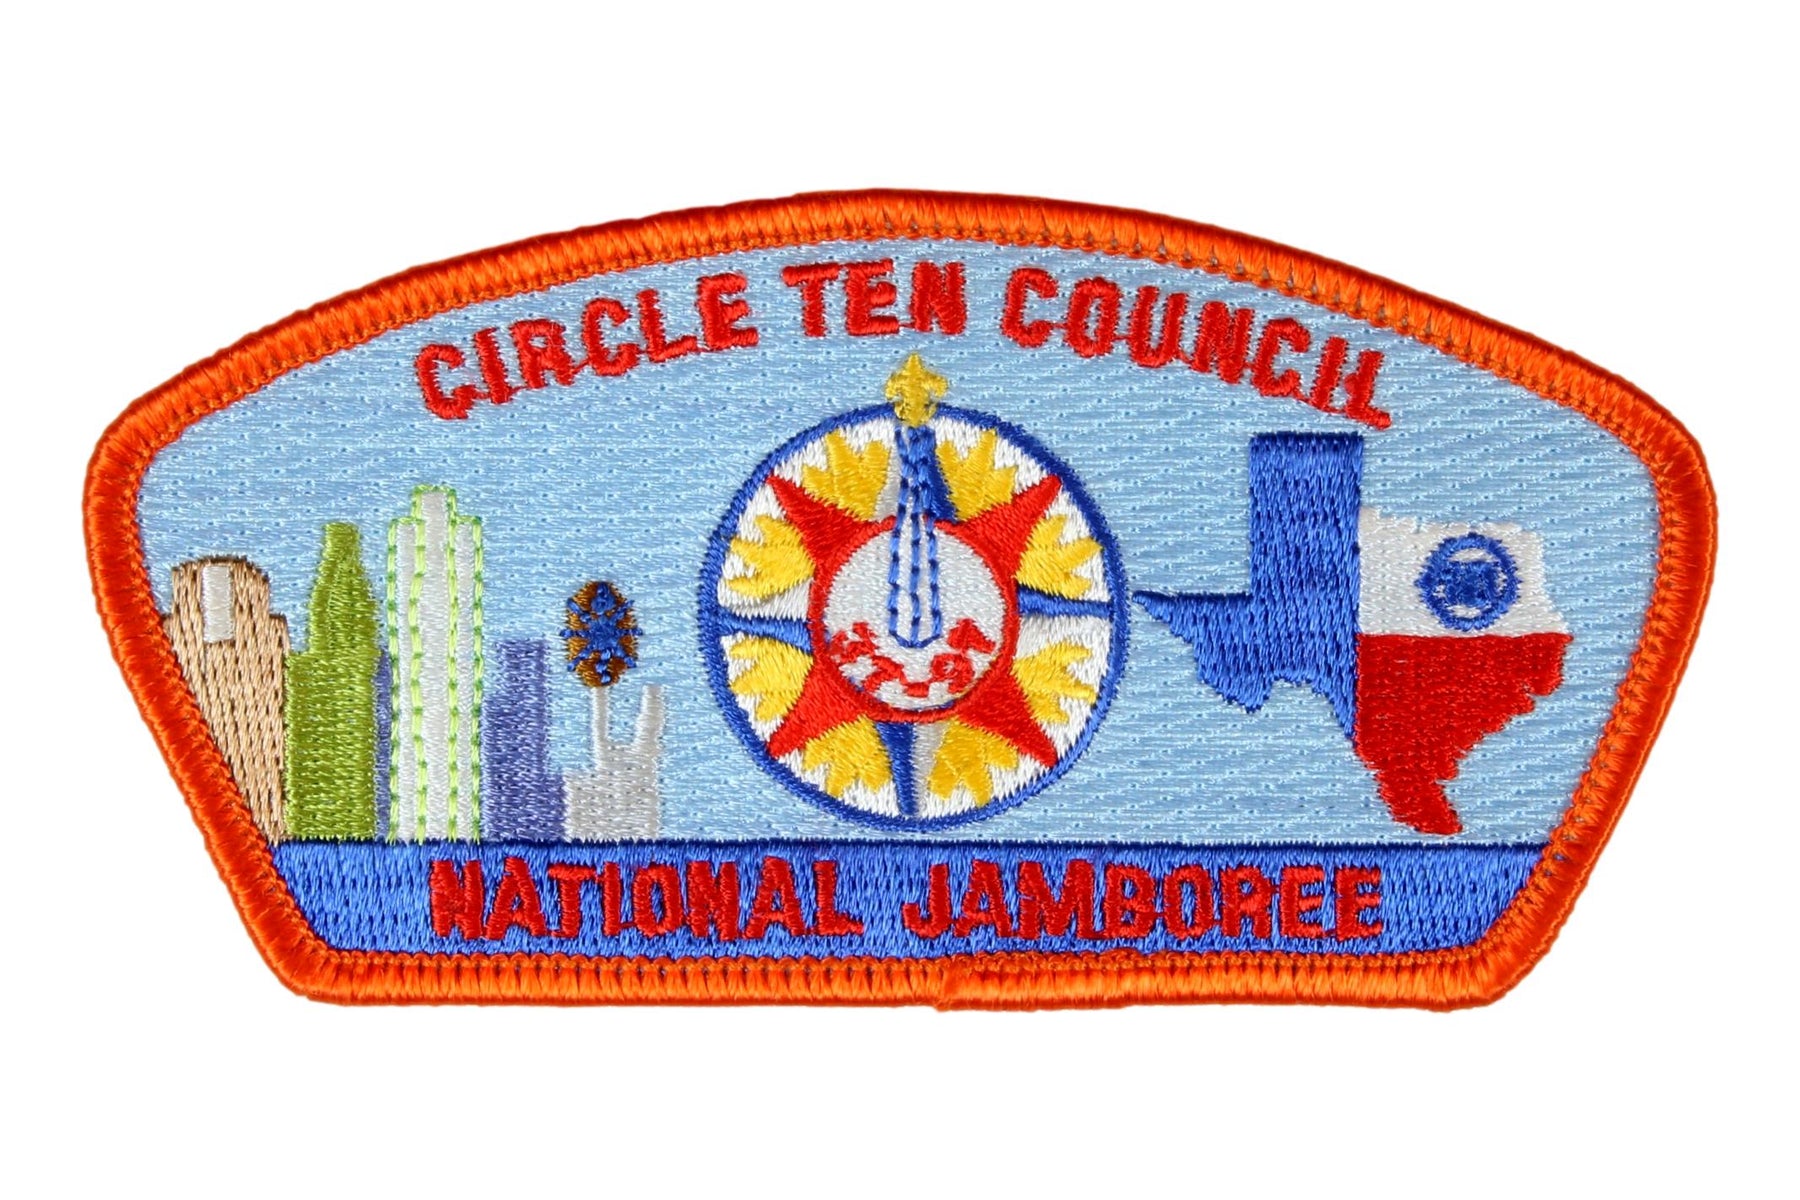 Circle Ten JSP NJ 1997